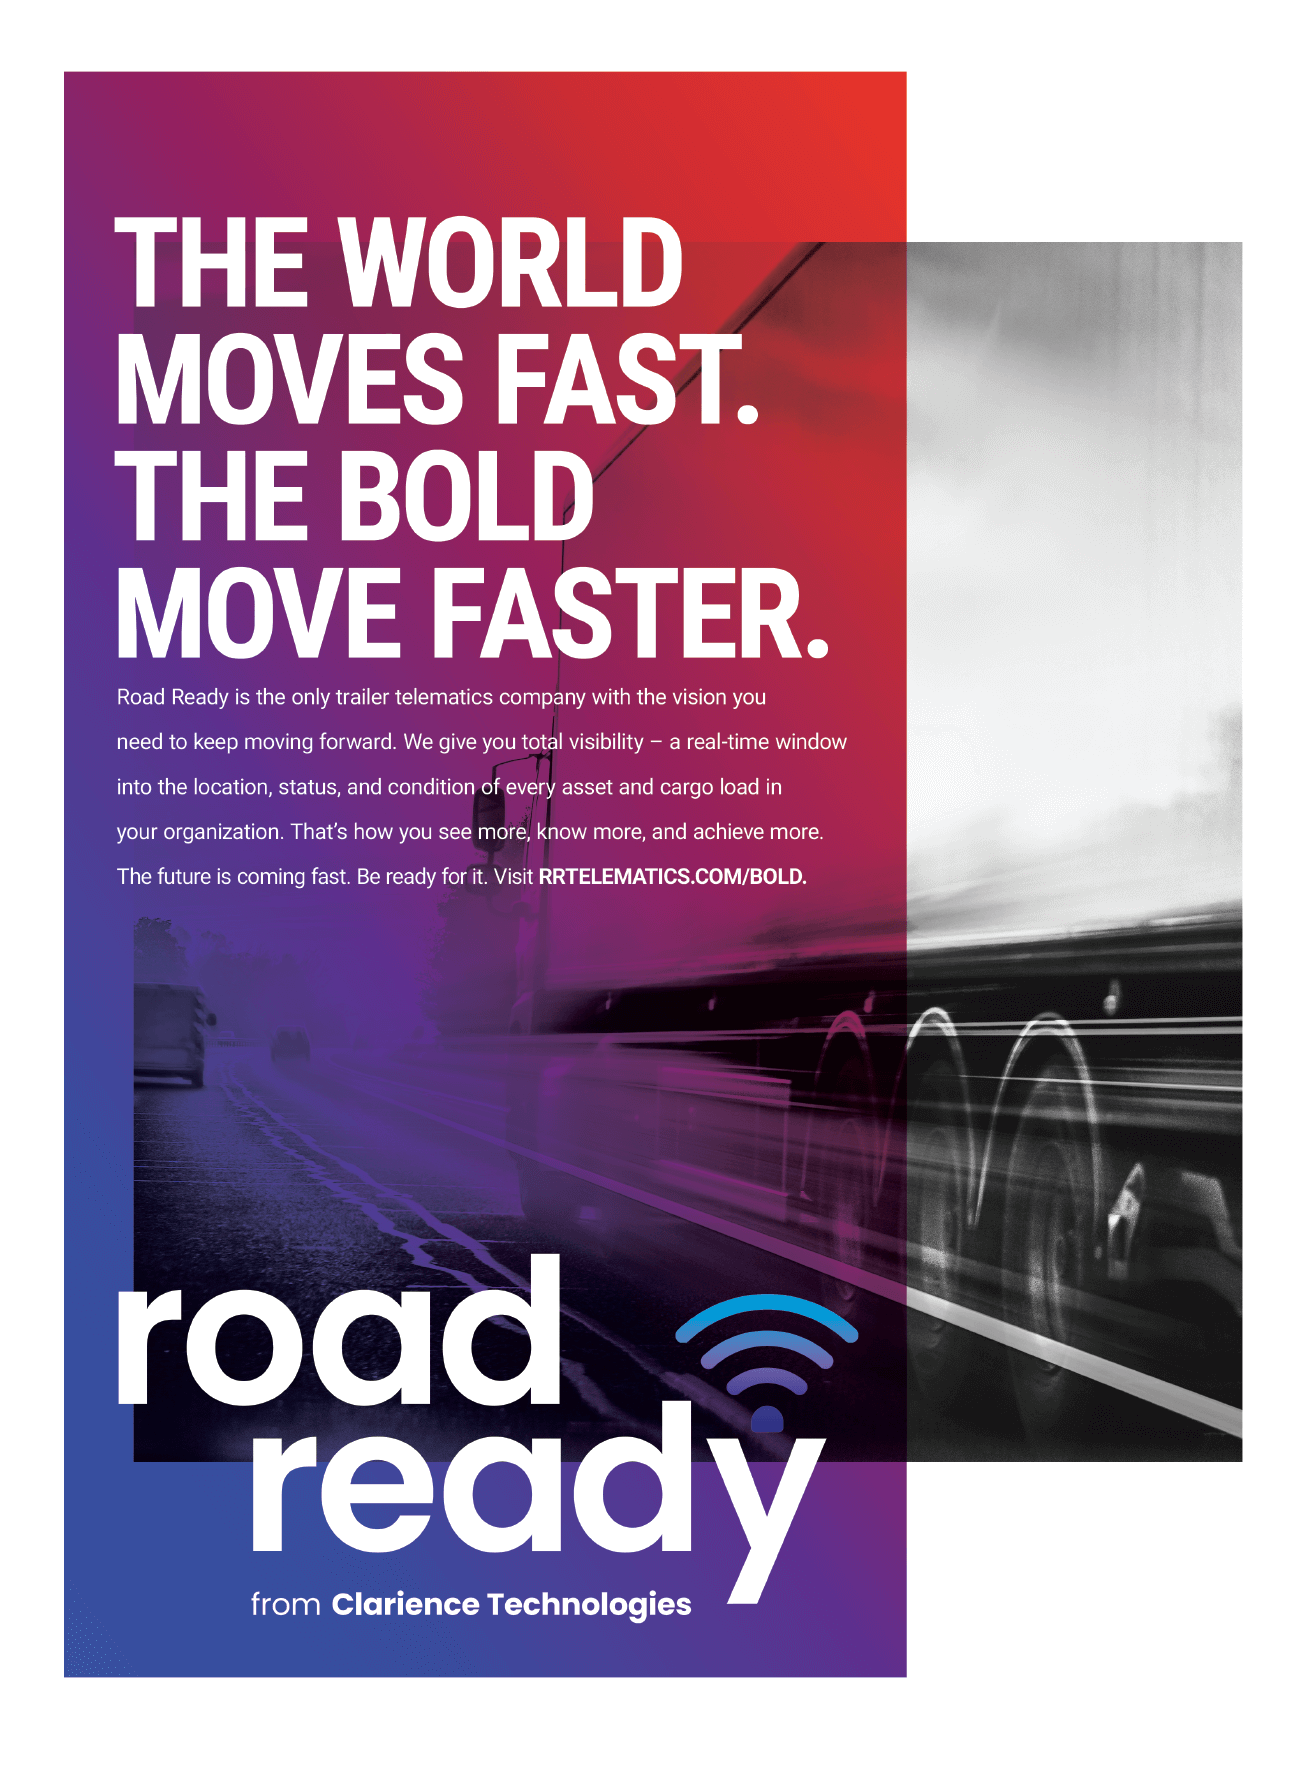 Road-Ready-The-Bold-